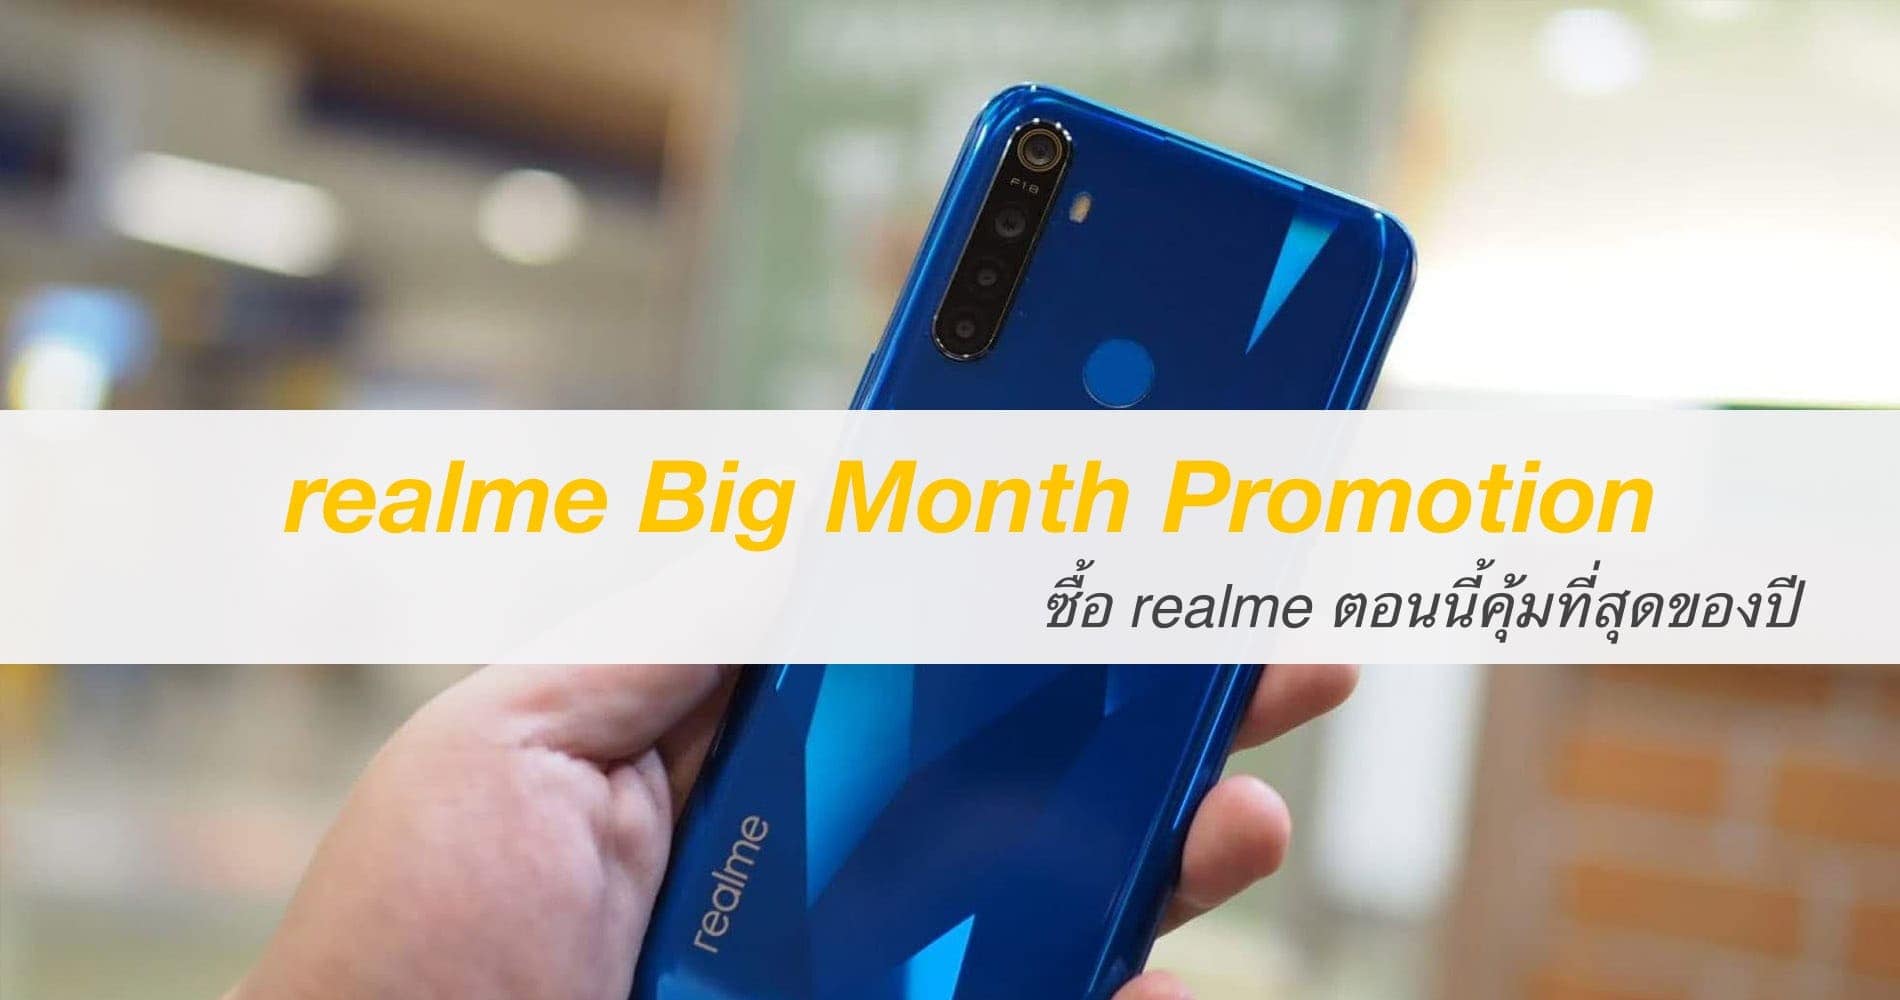 realme Big Month Promotion ซื้อ realme ตอนนี้คุ้มที่สุดของปี 1